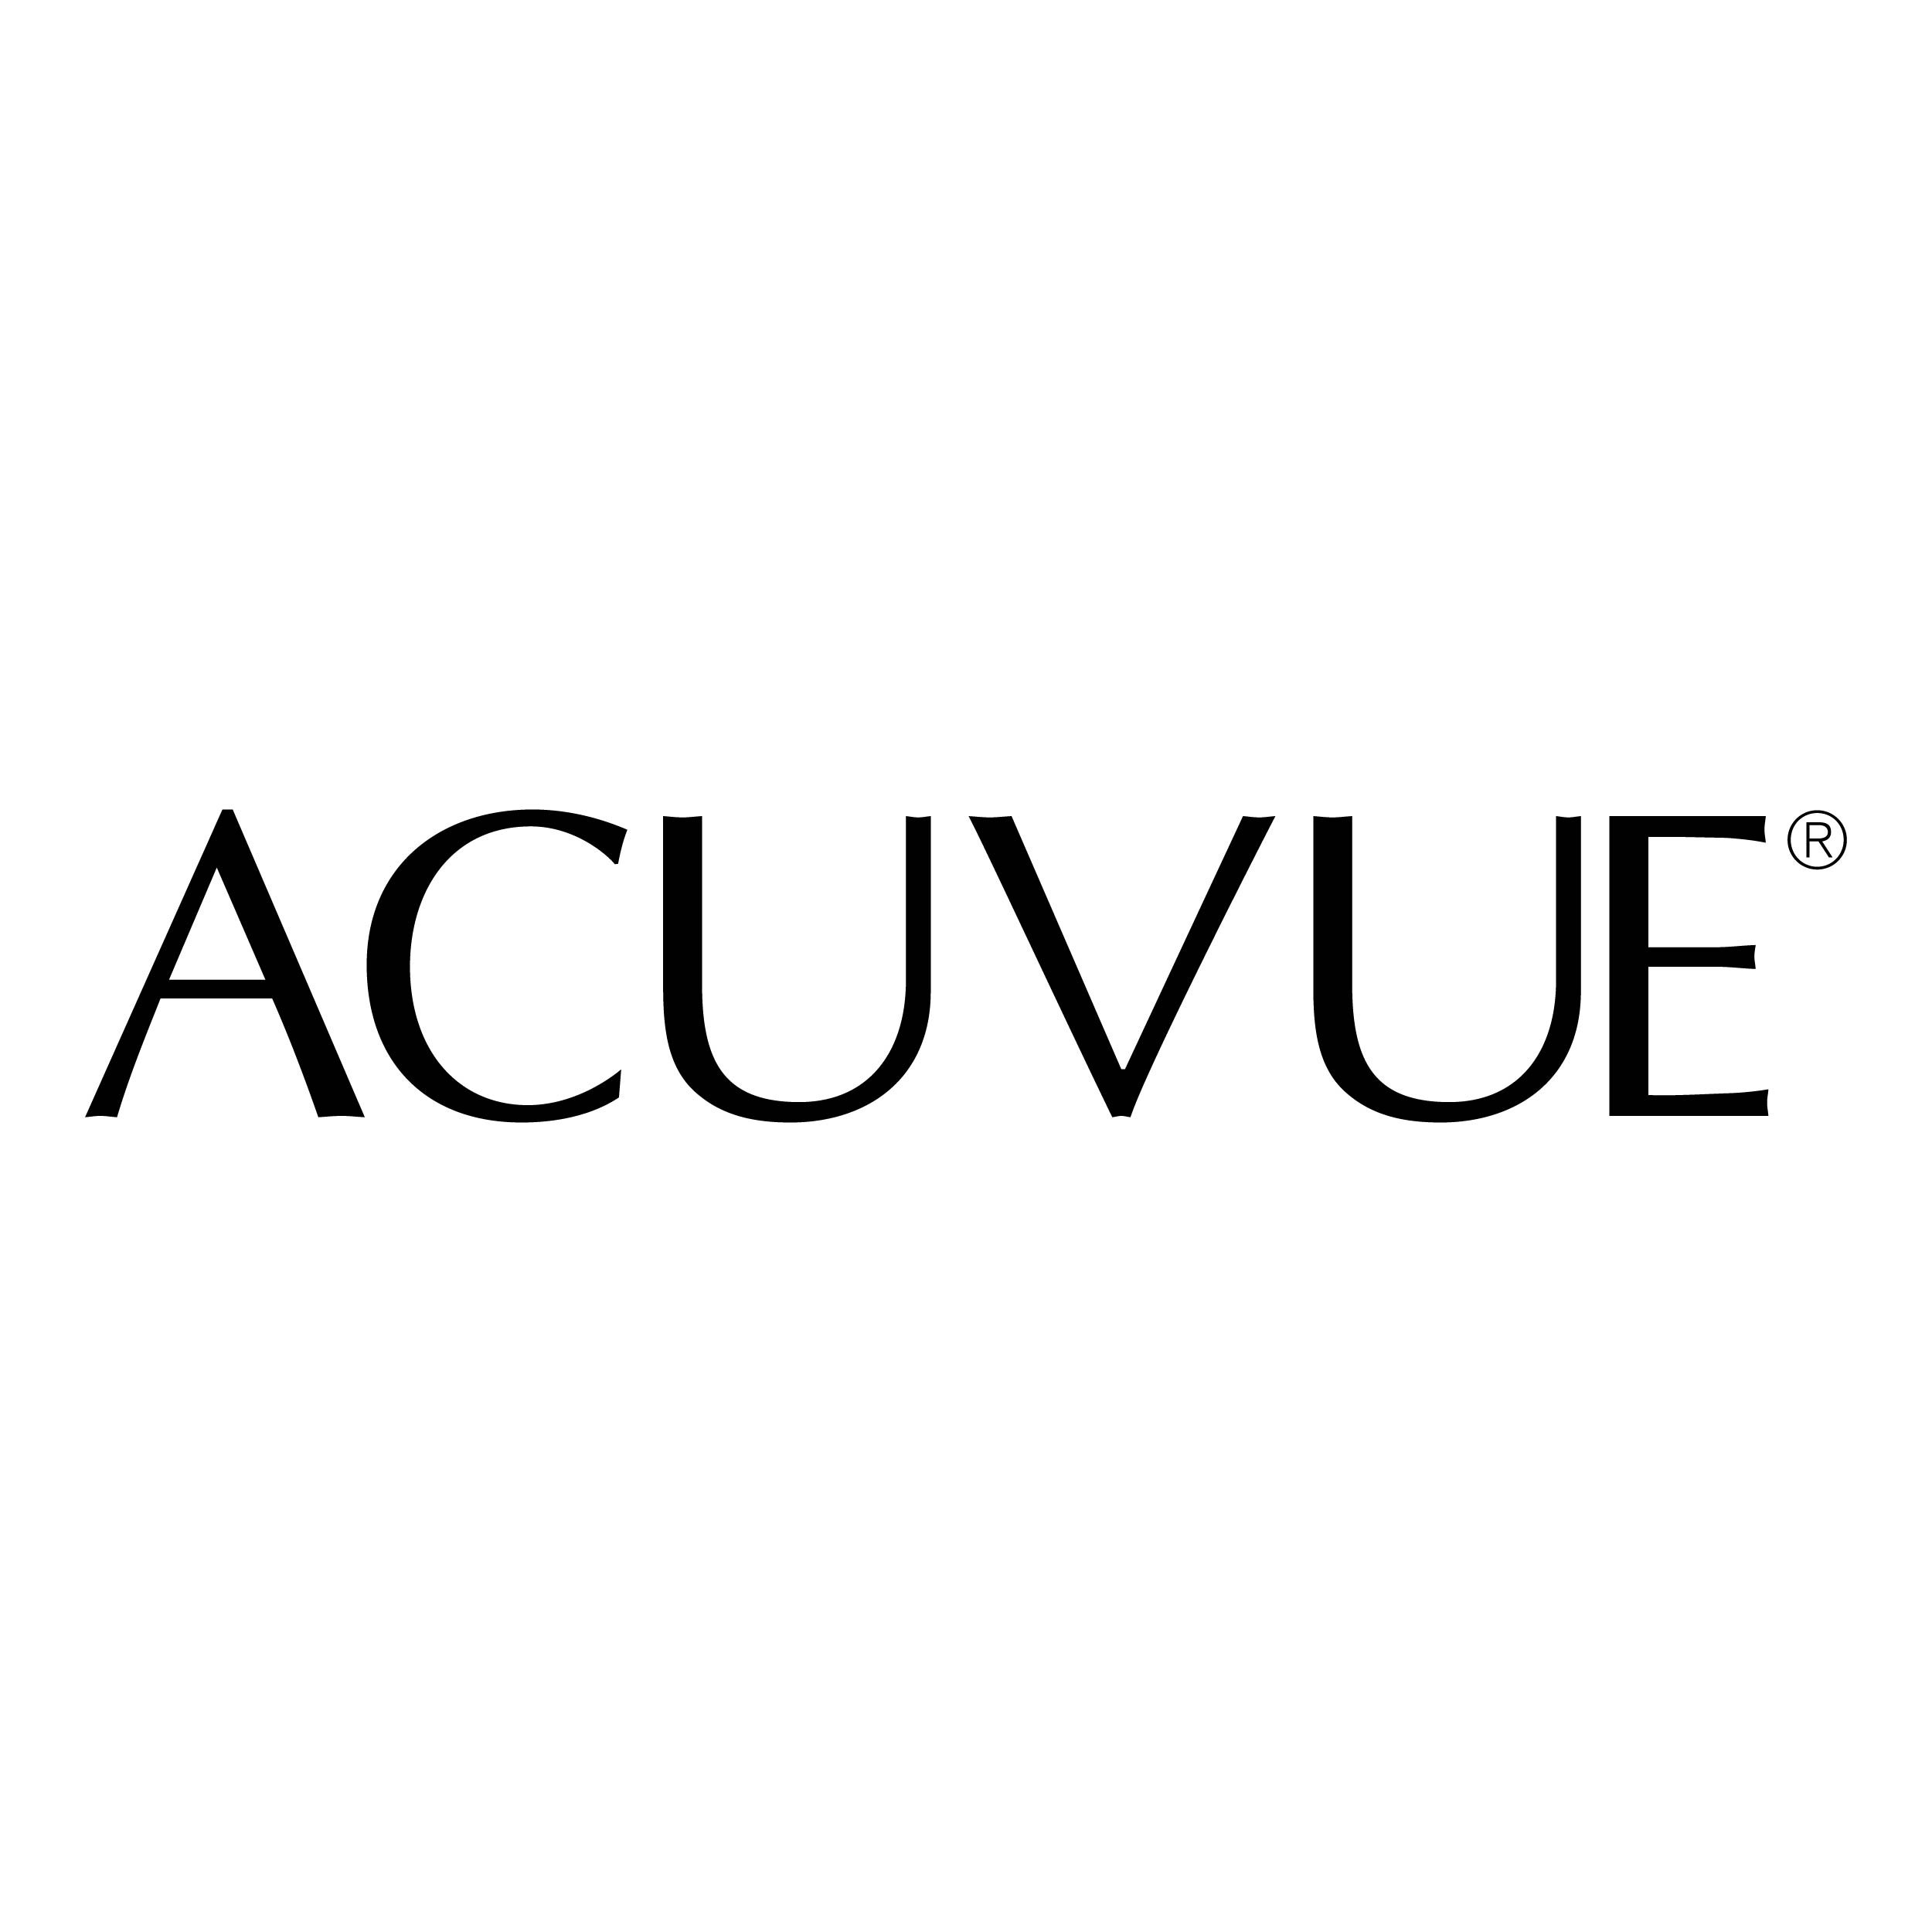 acuvue-logo-vector-01.jpg